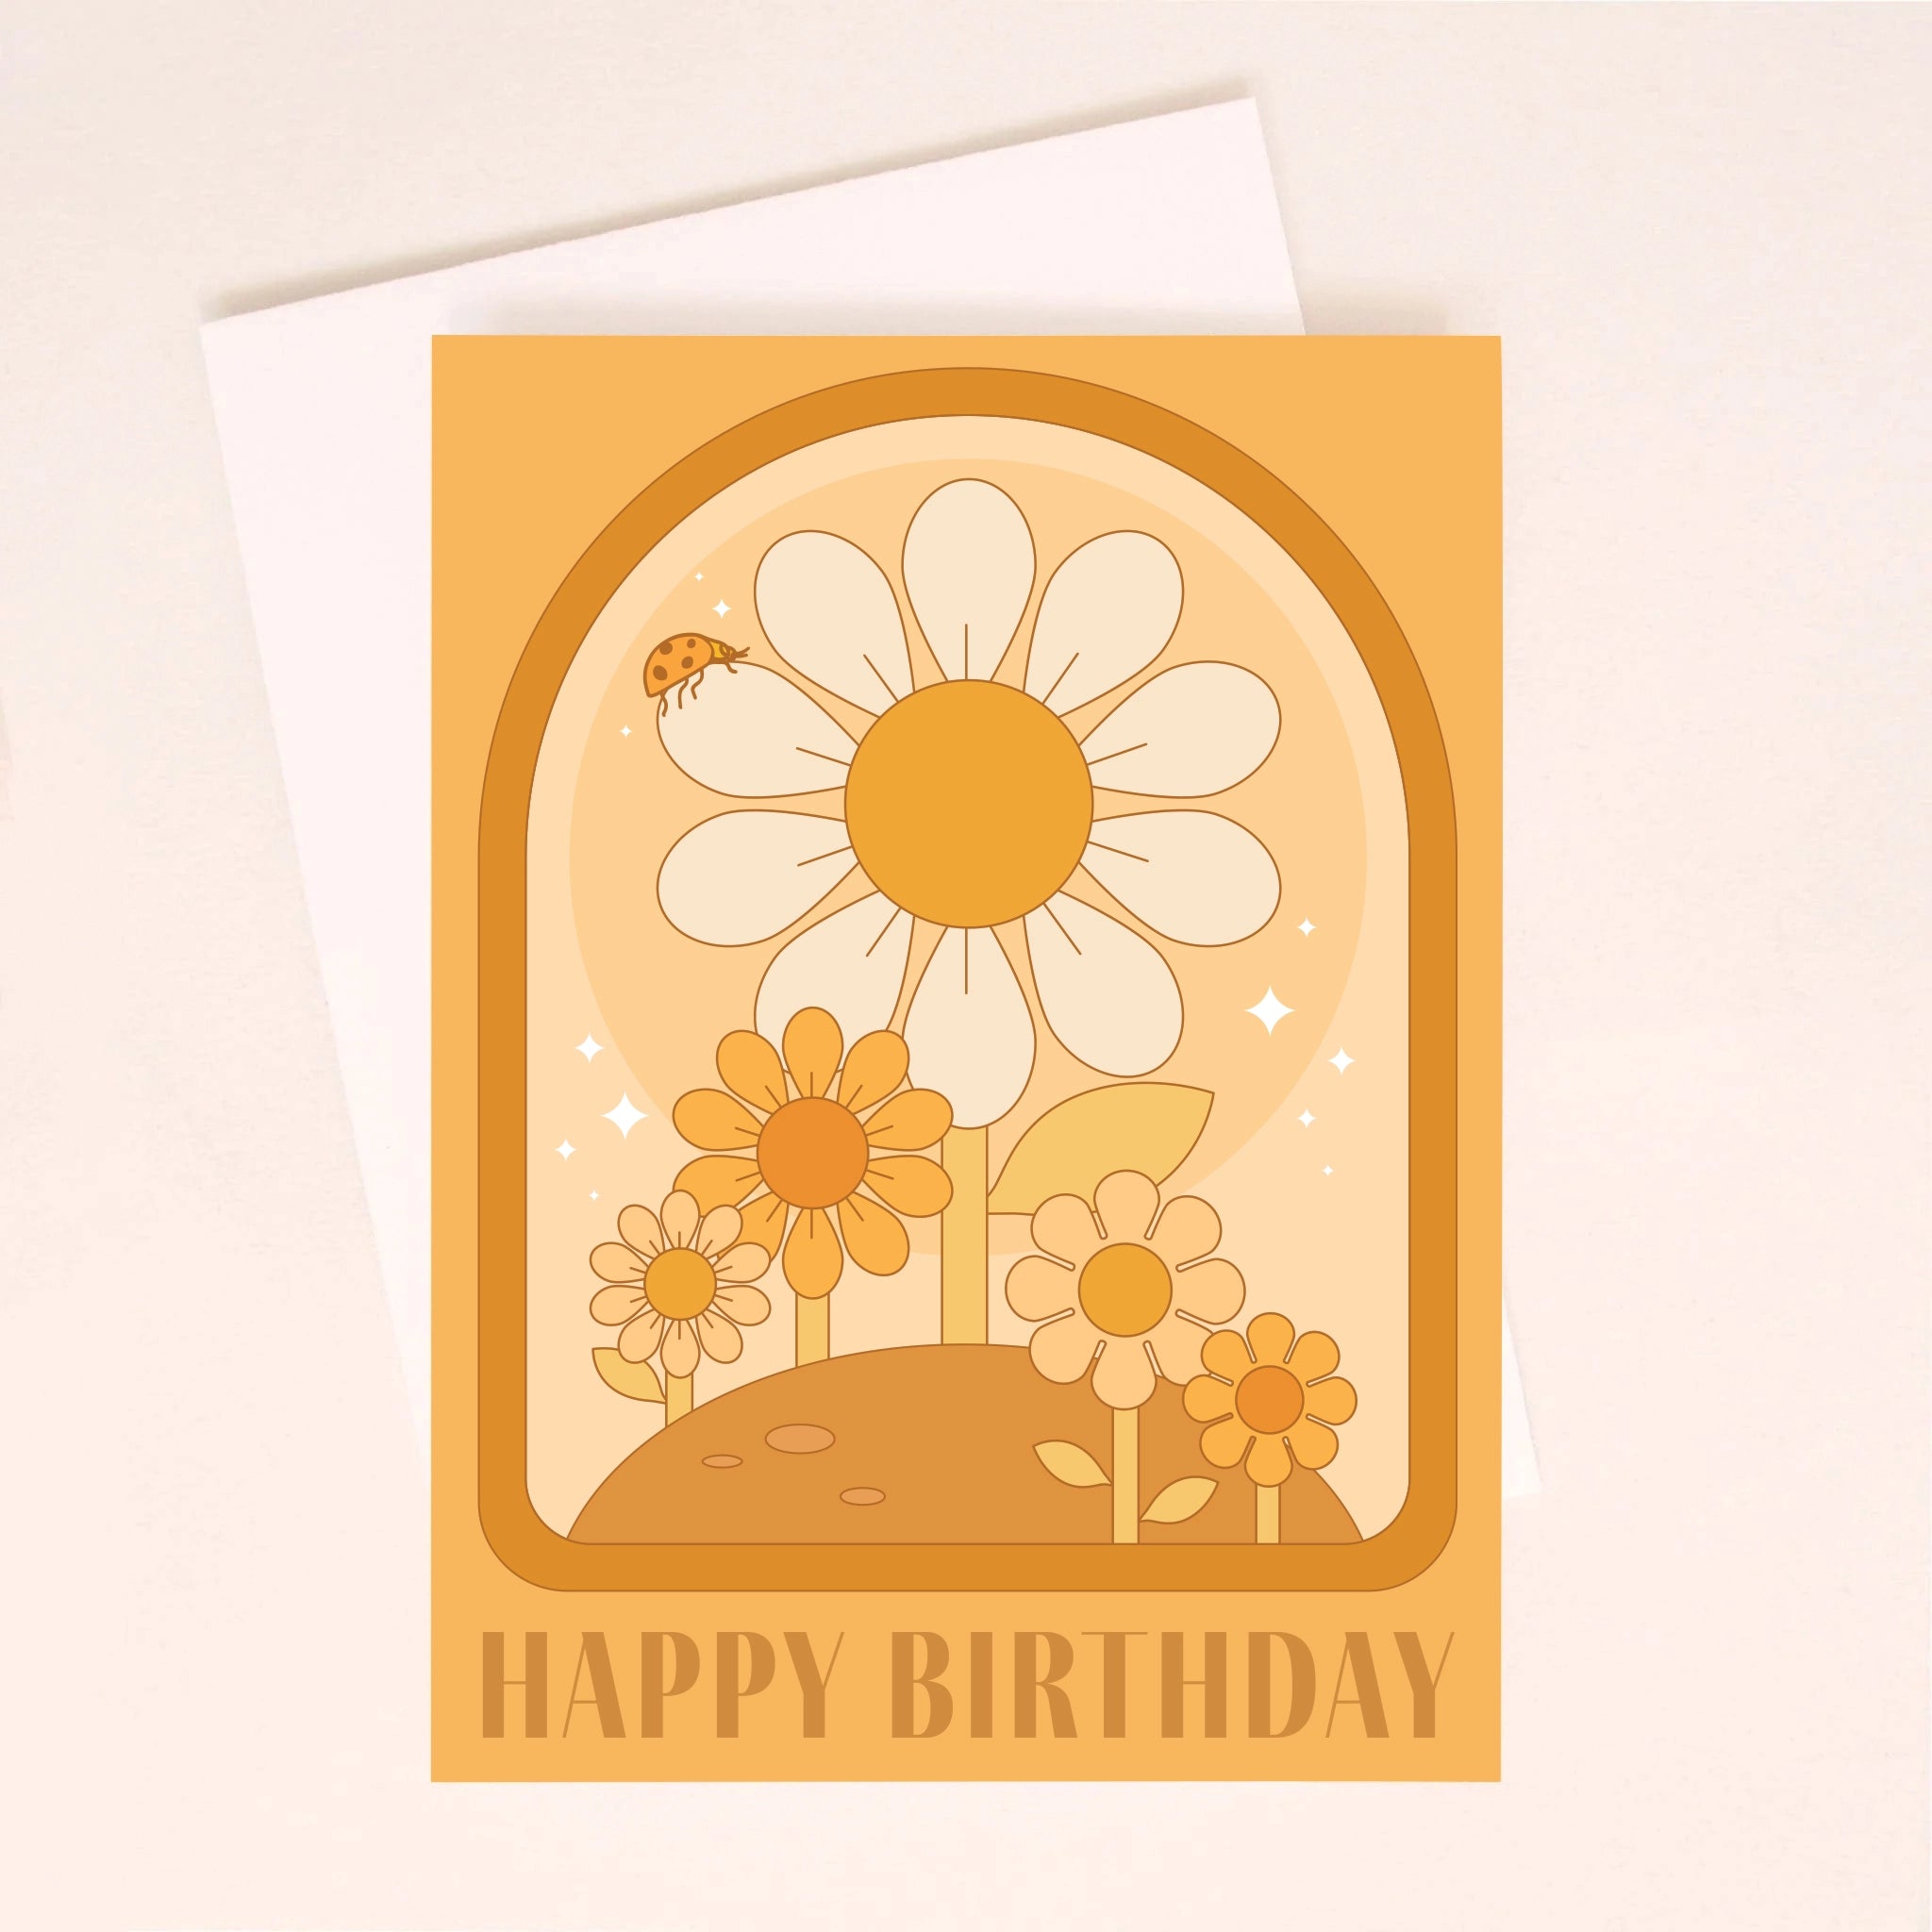 Daisy flower happy birthday greeting card Template